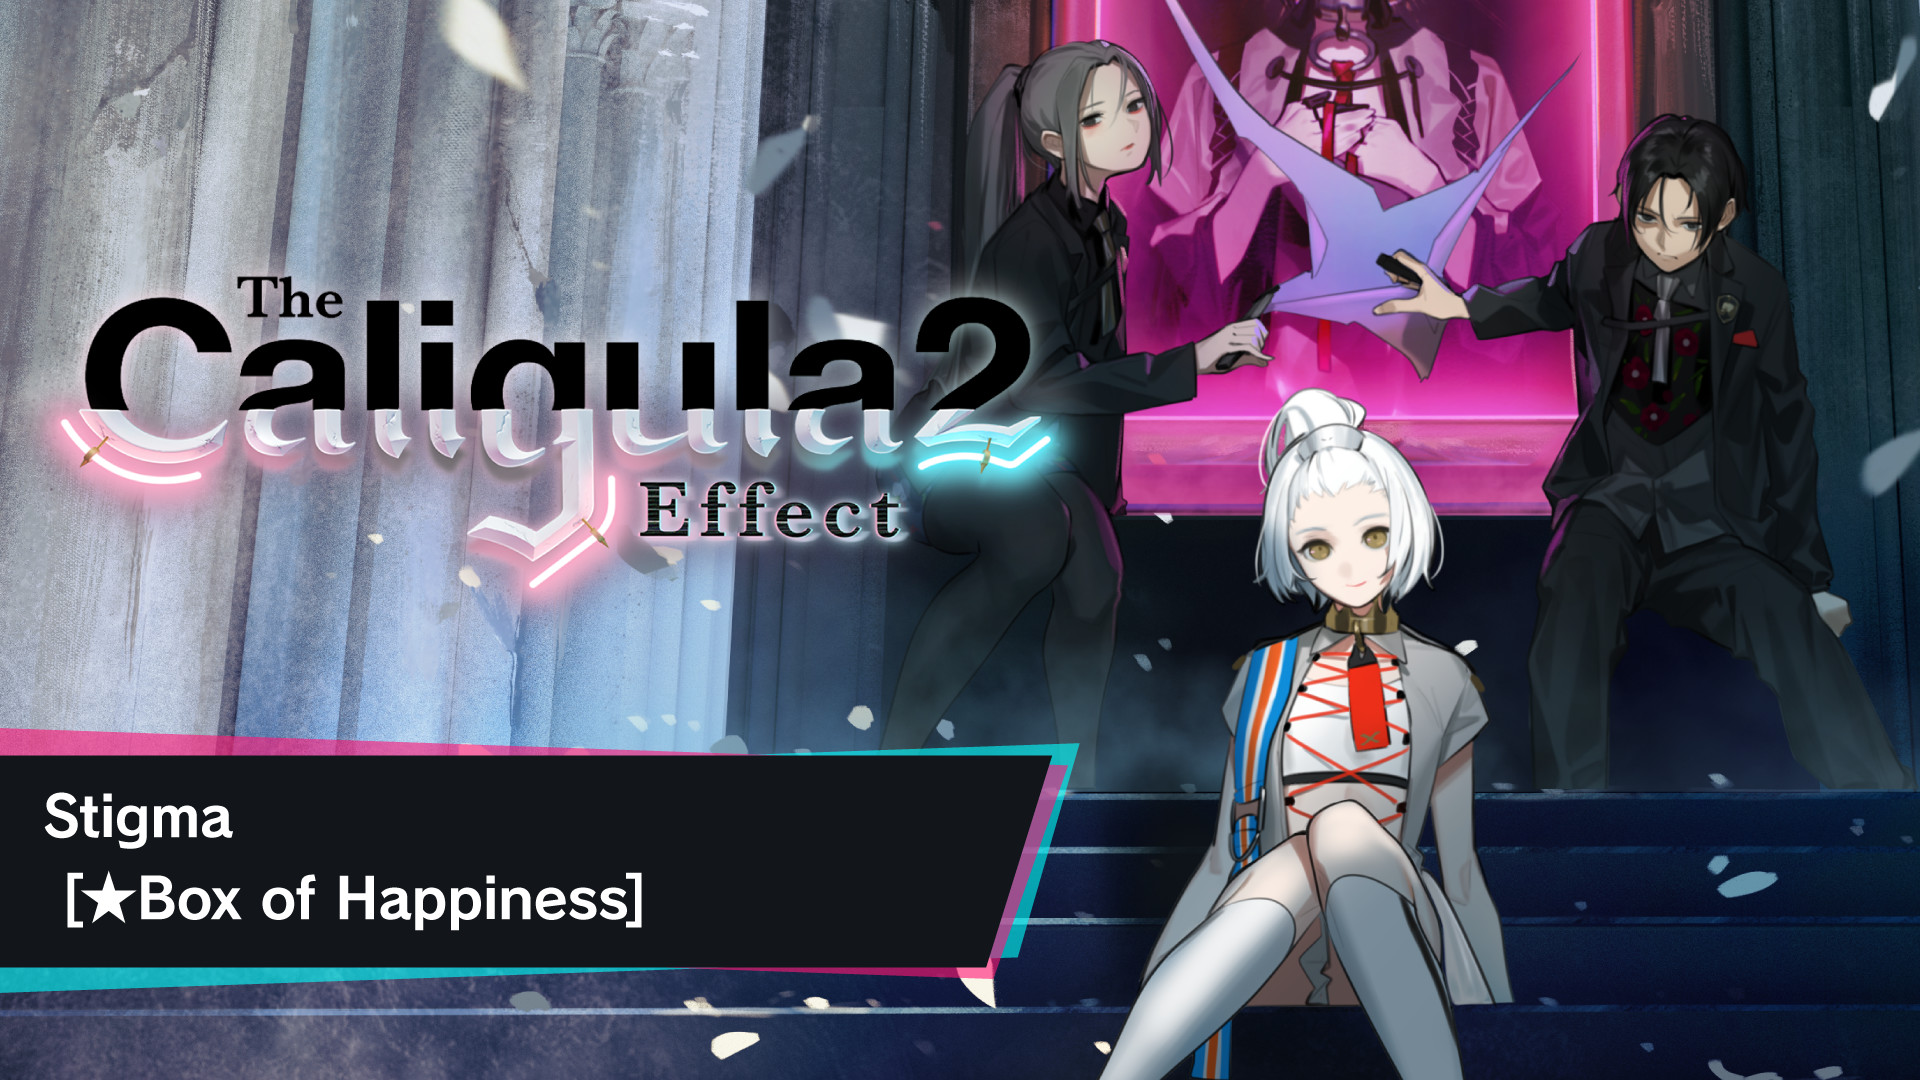 The Caligula Effect 2 - Stigma [★Box of Happiness] Featured Screenshot #1